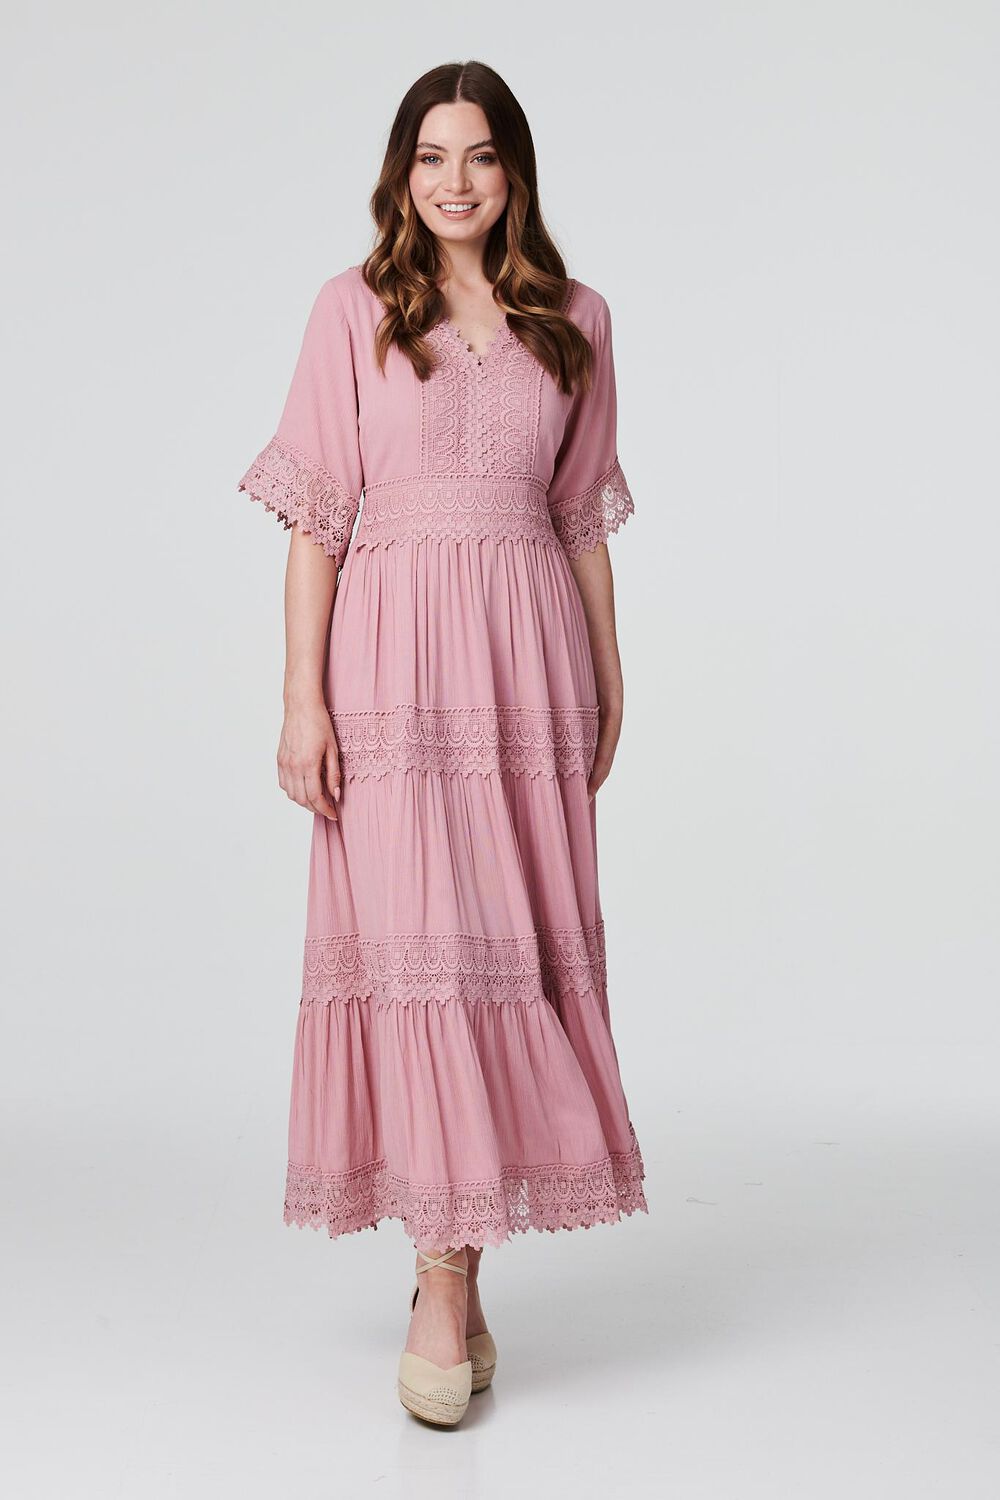 Izabel London Pink - Short Sleeve Crochet Maxi Dress, Size: 12